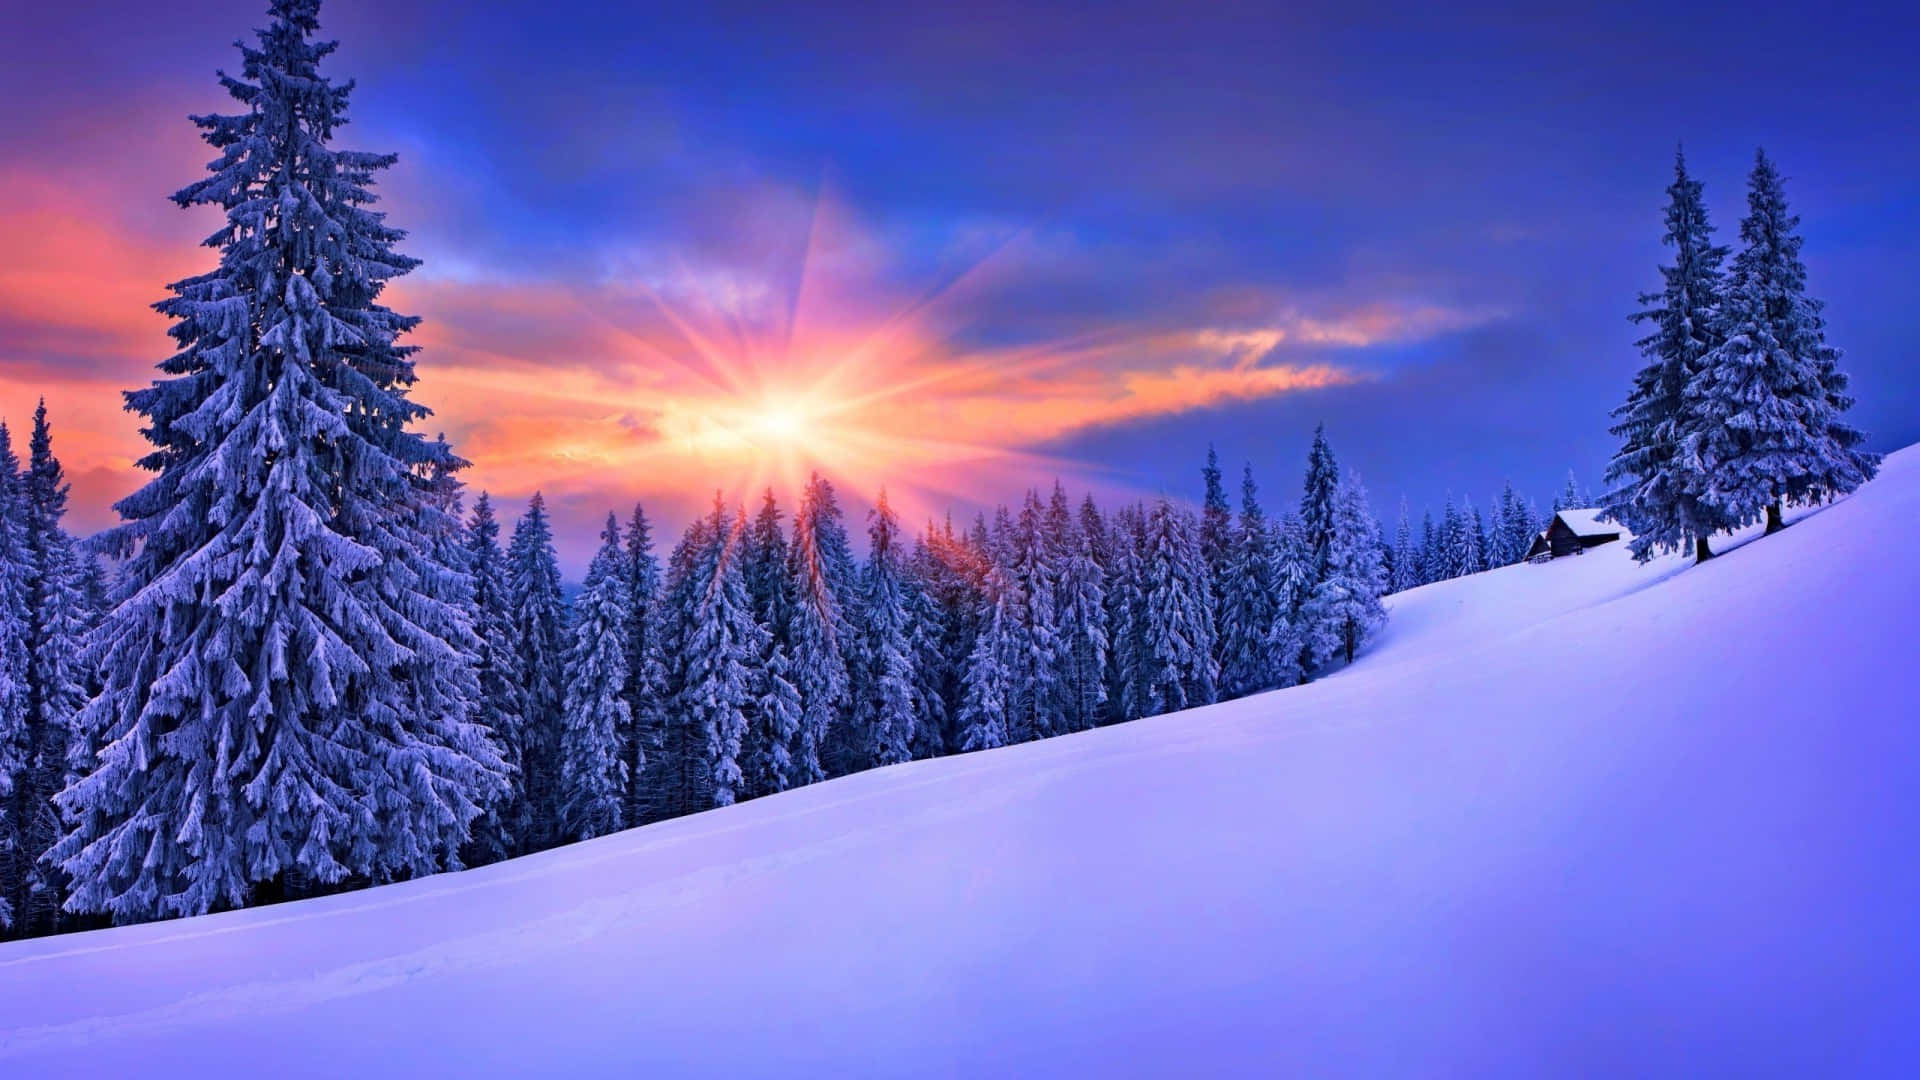 Caption: A tranquil winter wonderland